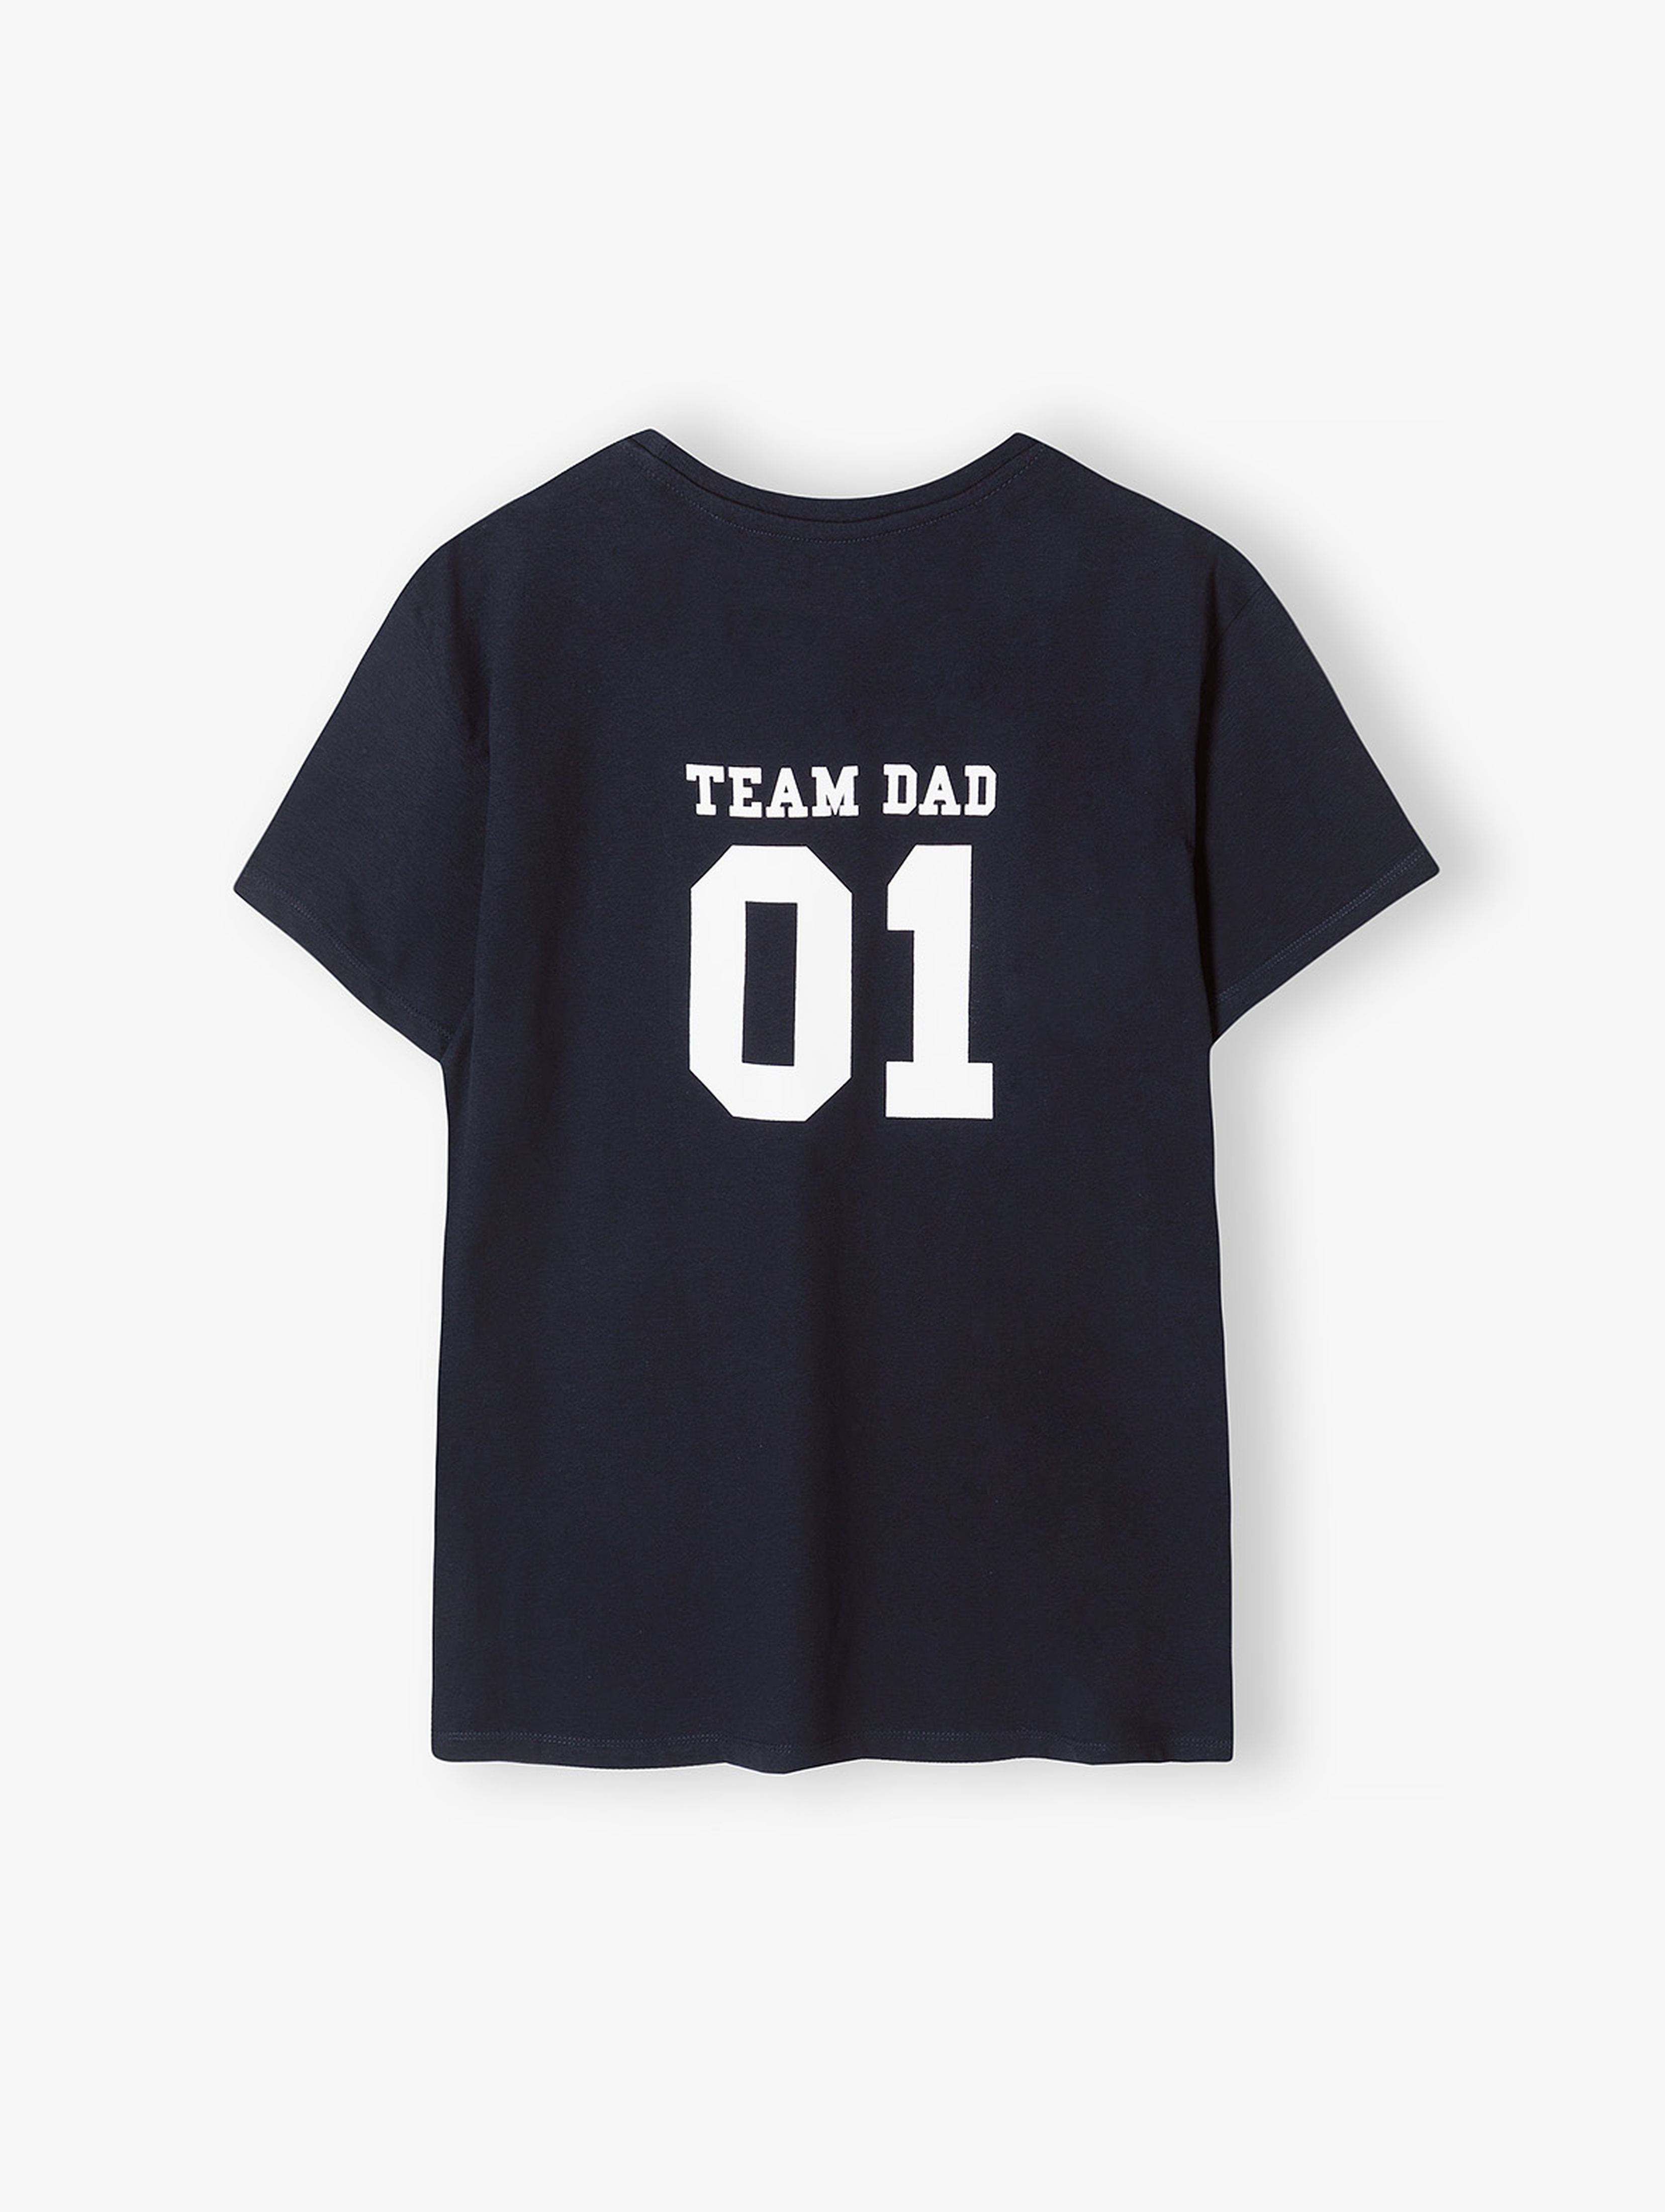 T-shirt męski z napisem Team Dad granatowy